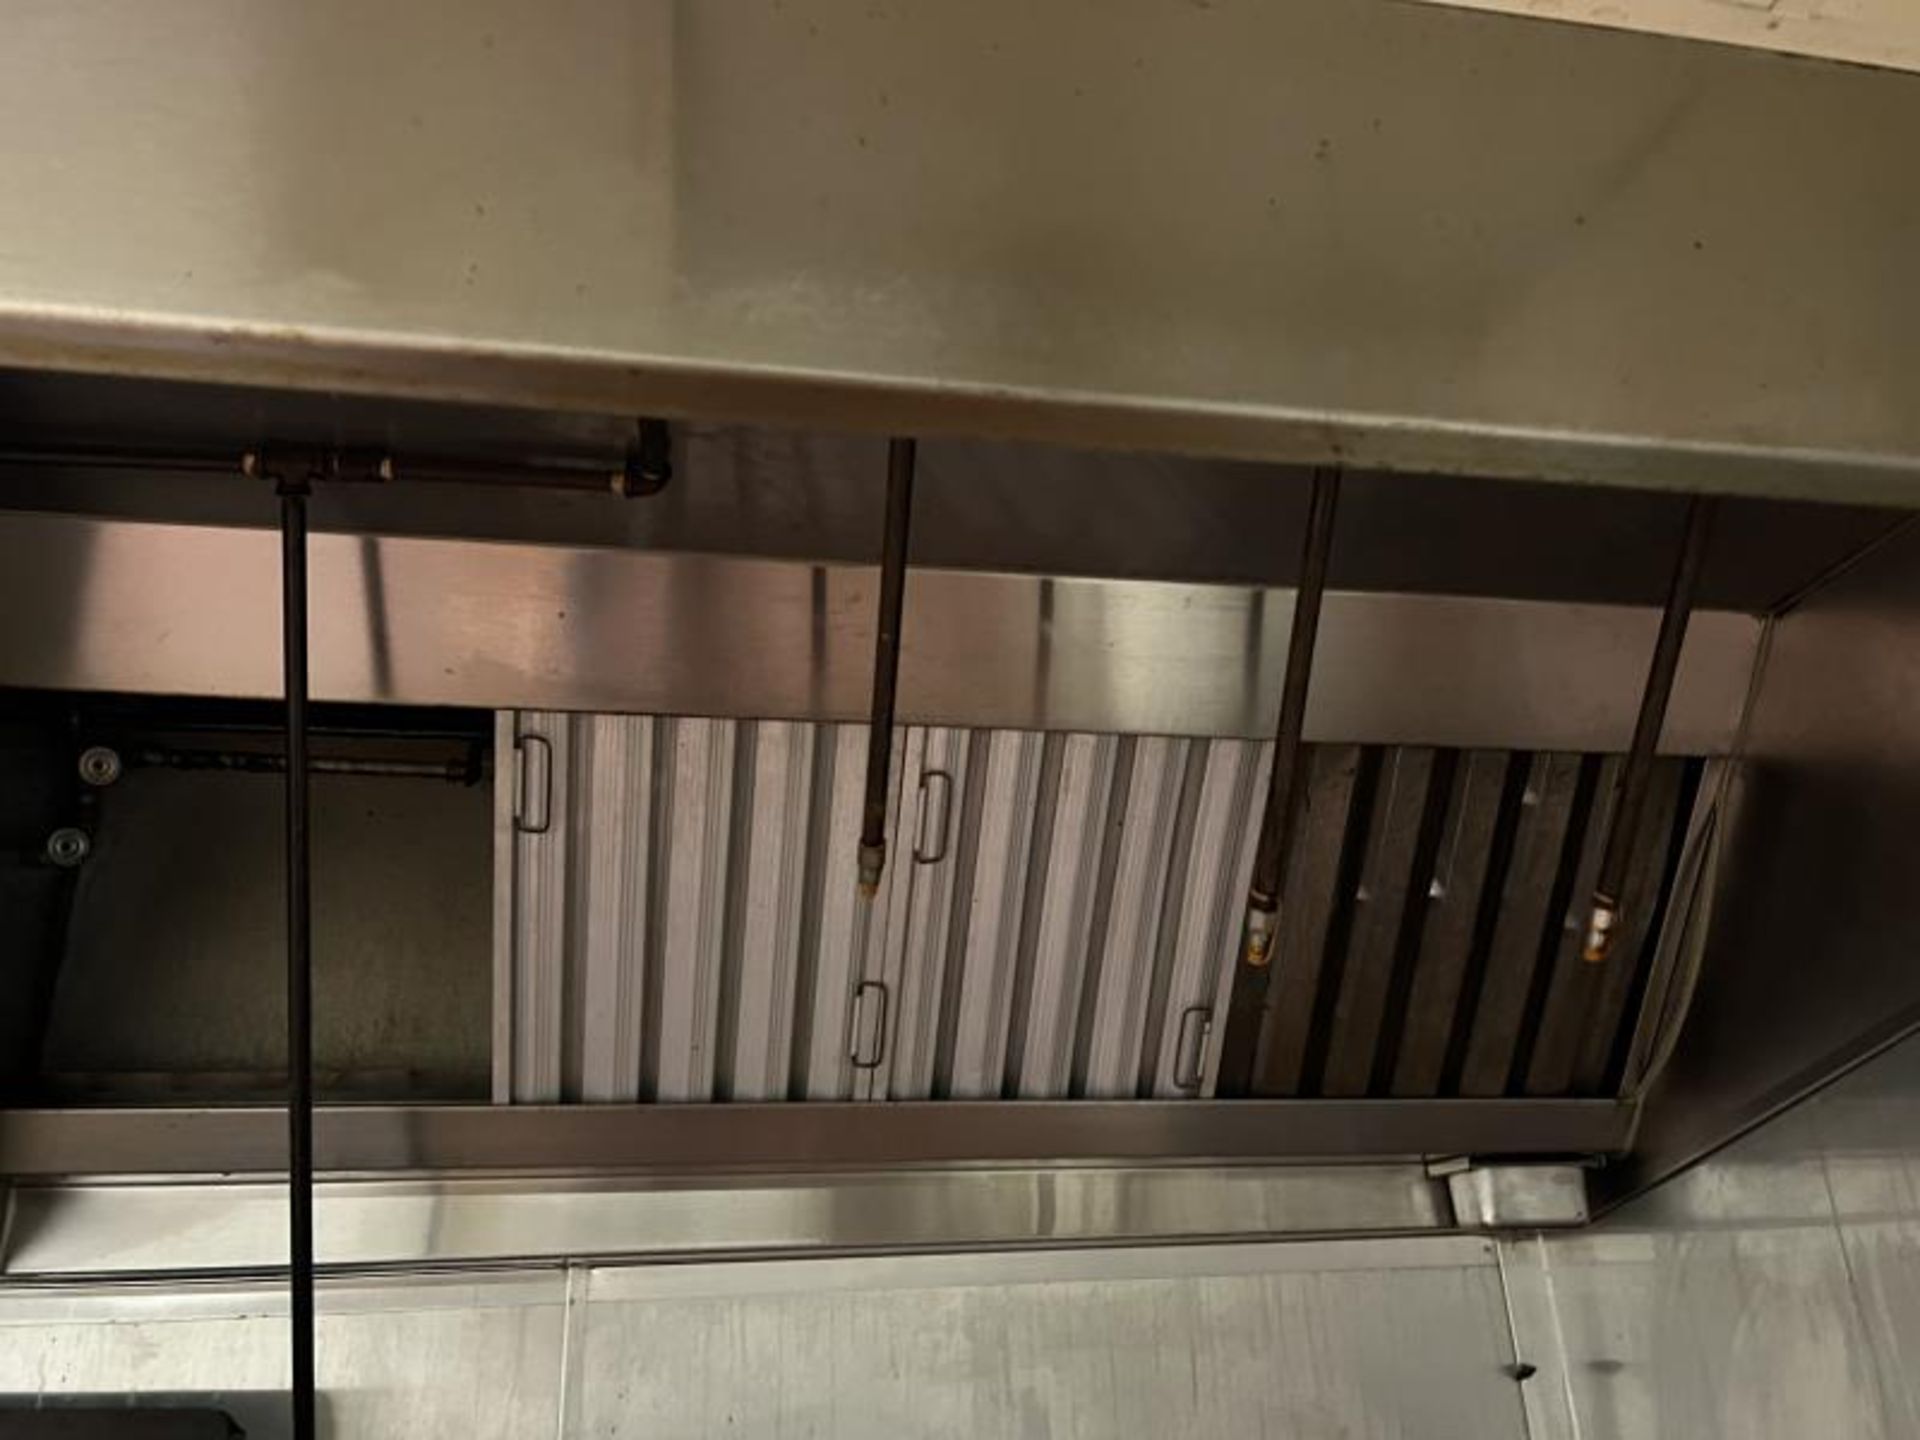 Exhaust Hood 12' Long in Basement Kitchen - Image 4 of 5